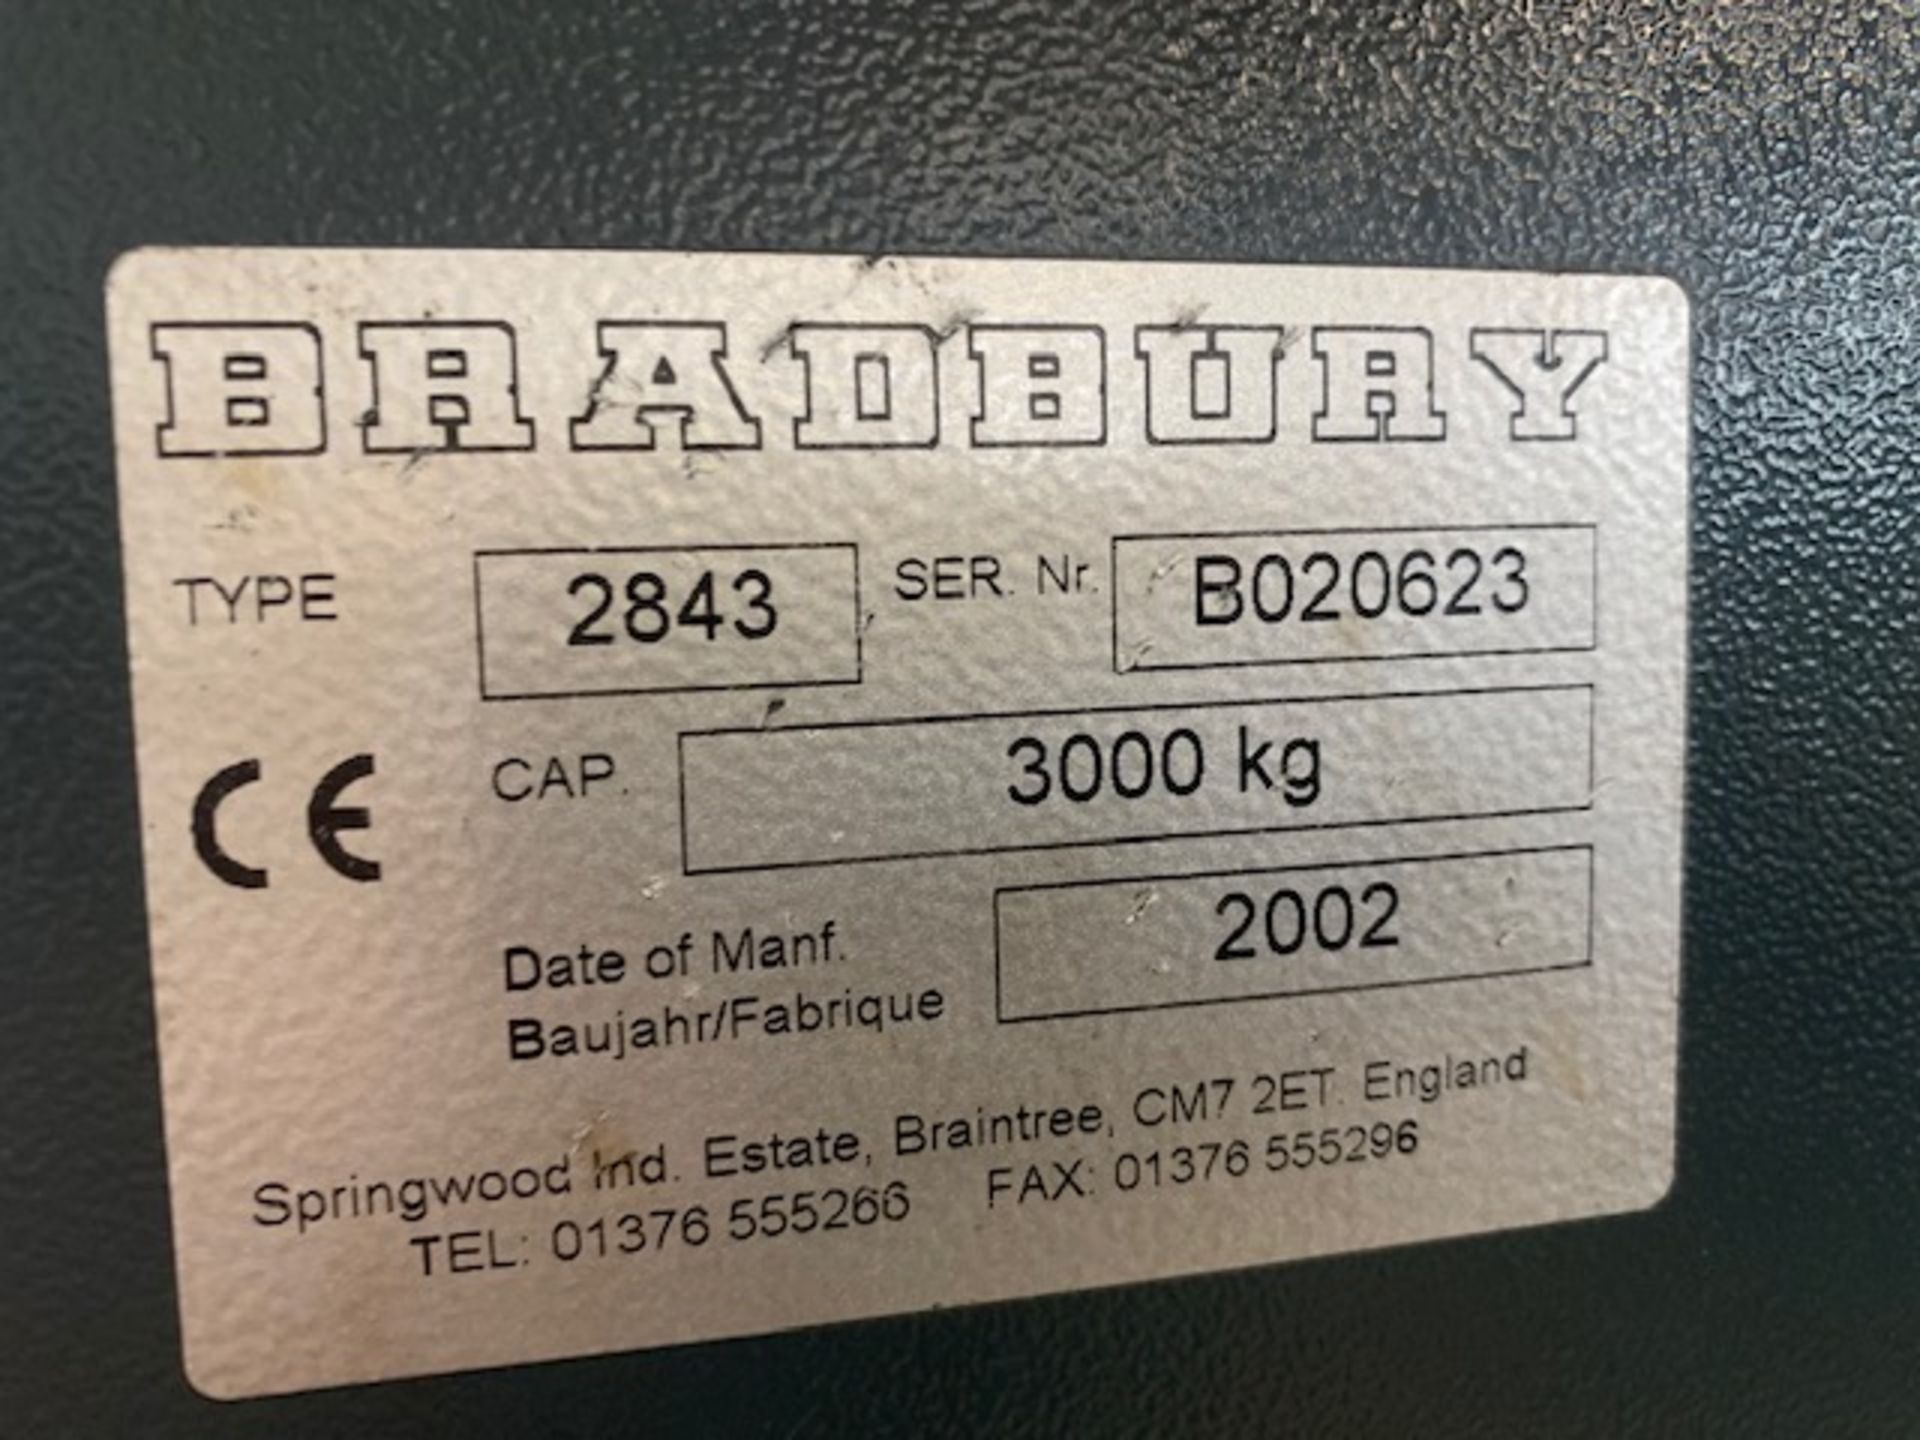 Bradbury 2-post vehicle lift 3000kg Type 2843 Serial No. 8020623 (2002). NB: This item has no record - Image 4 of 4